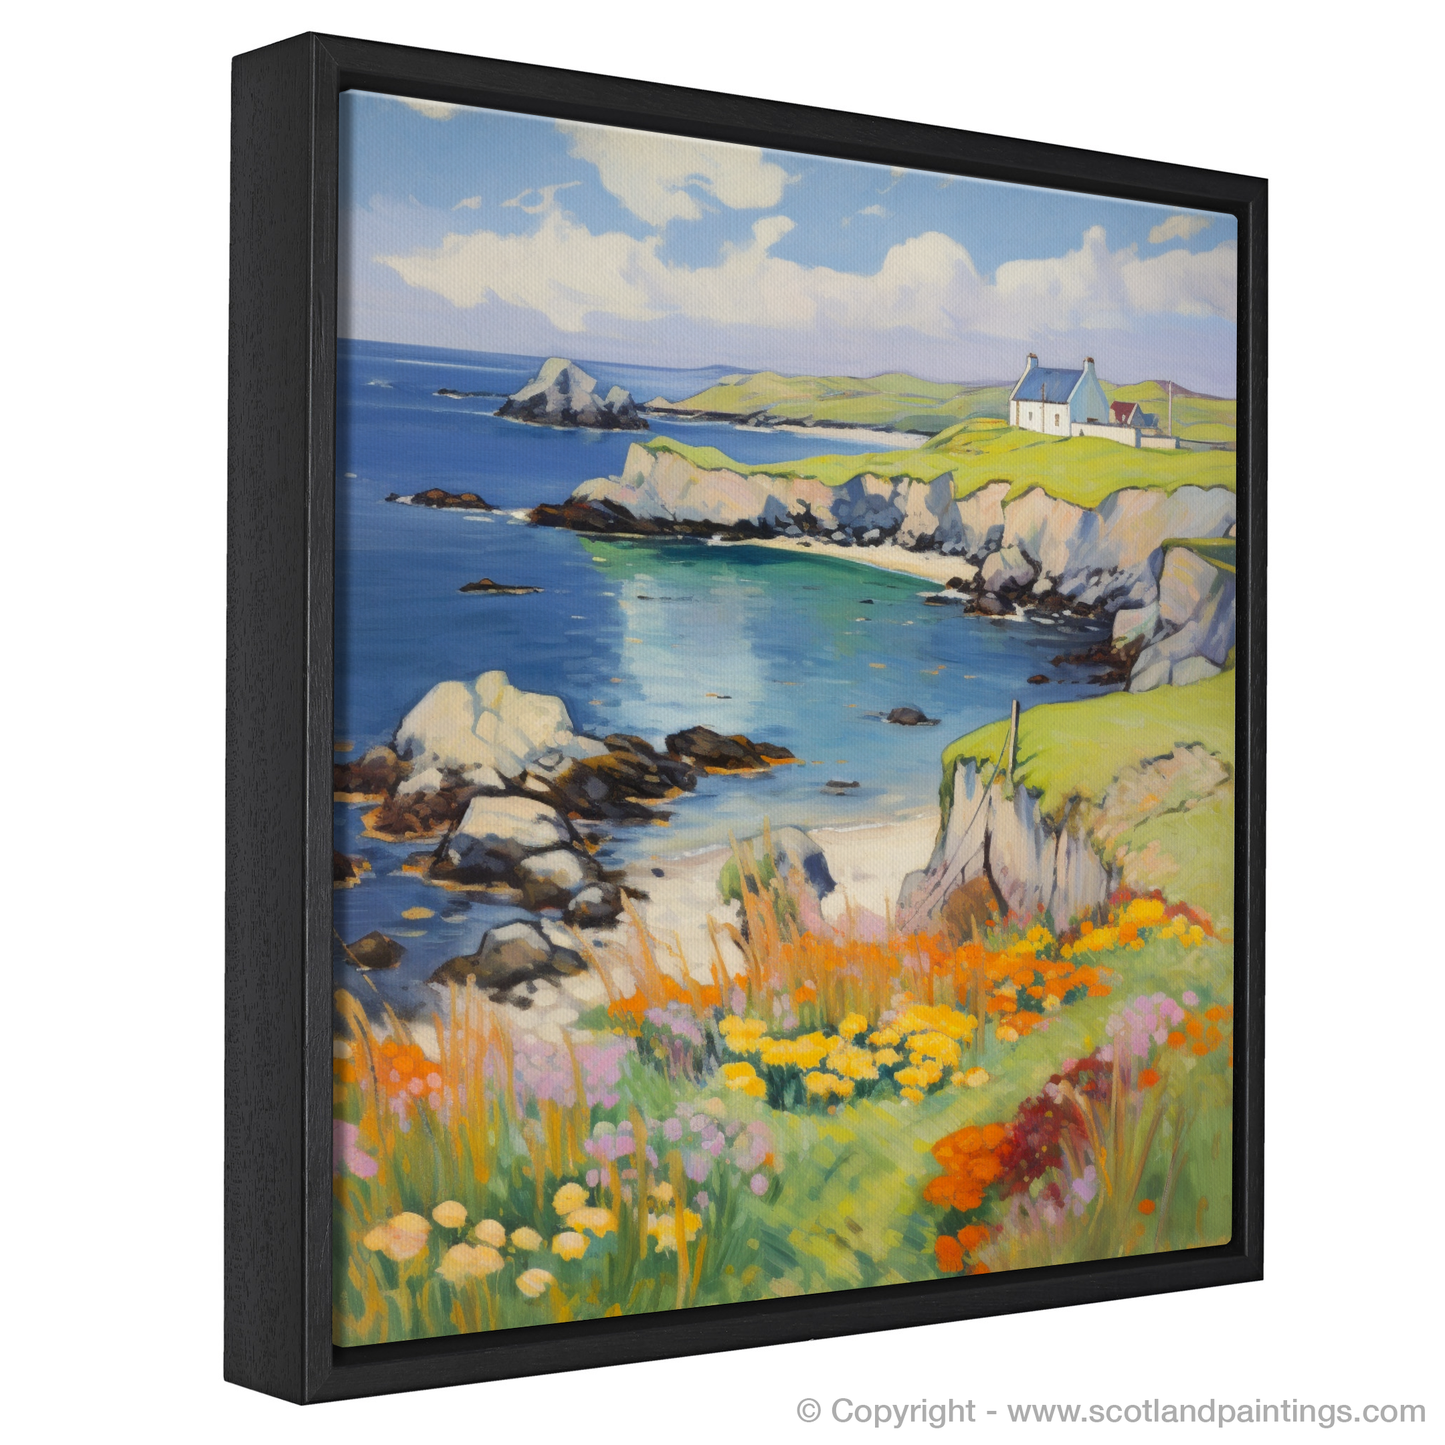 Painting and Art Print of Shetland, North of mainland Scotland in summer entitled "Shetland Summer Serenade".